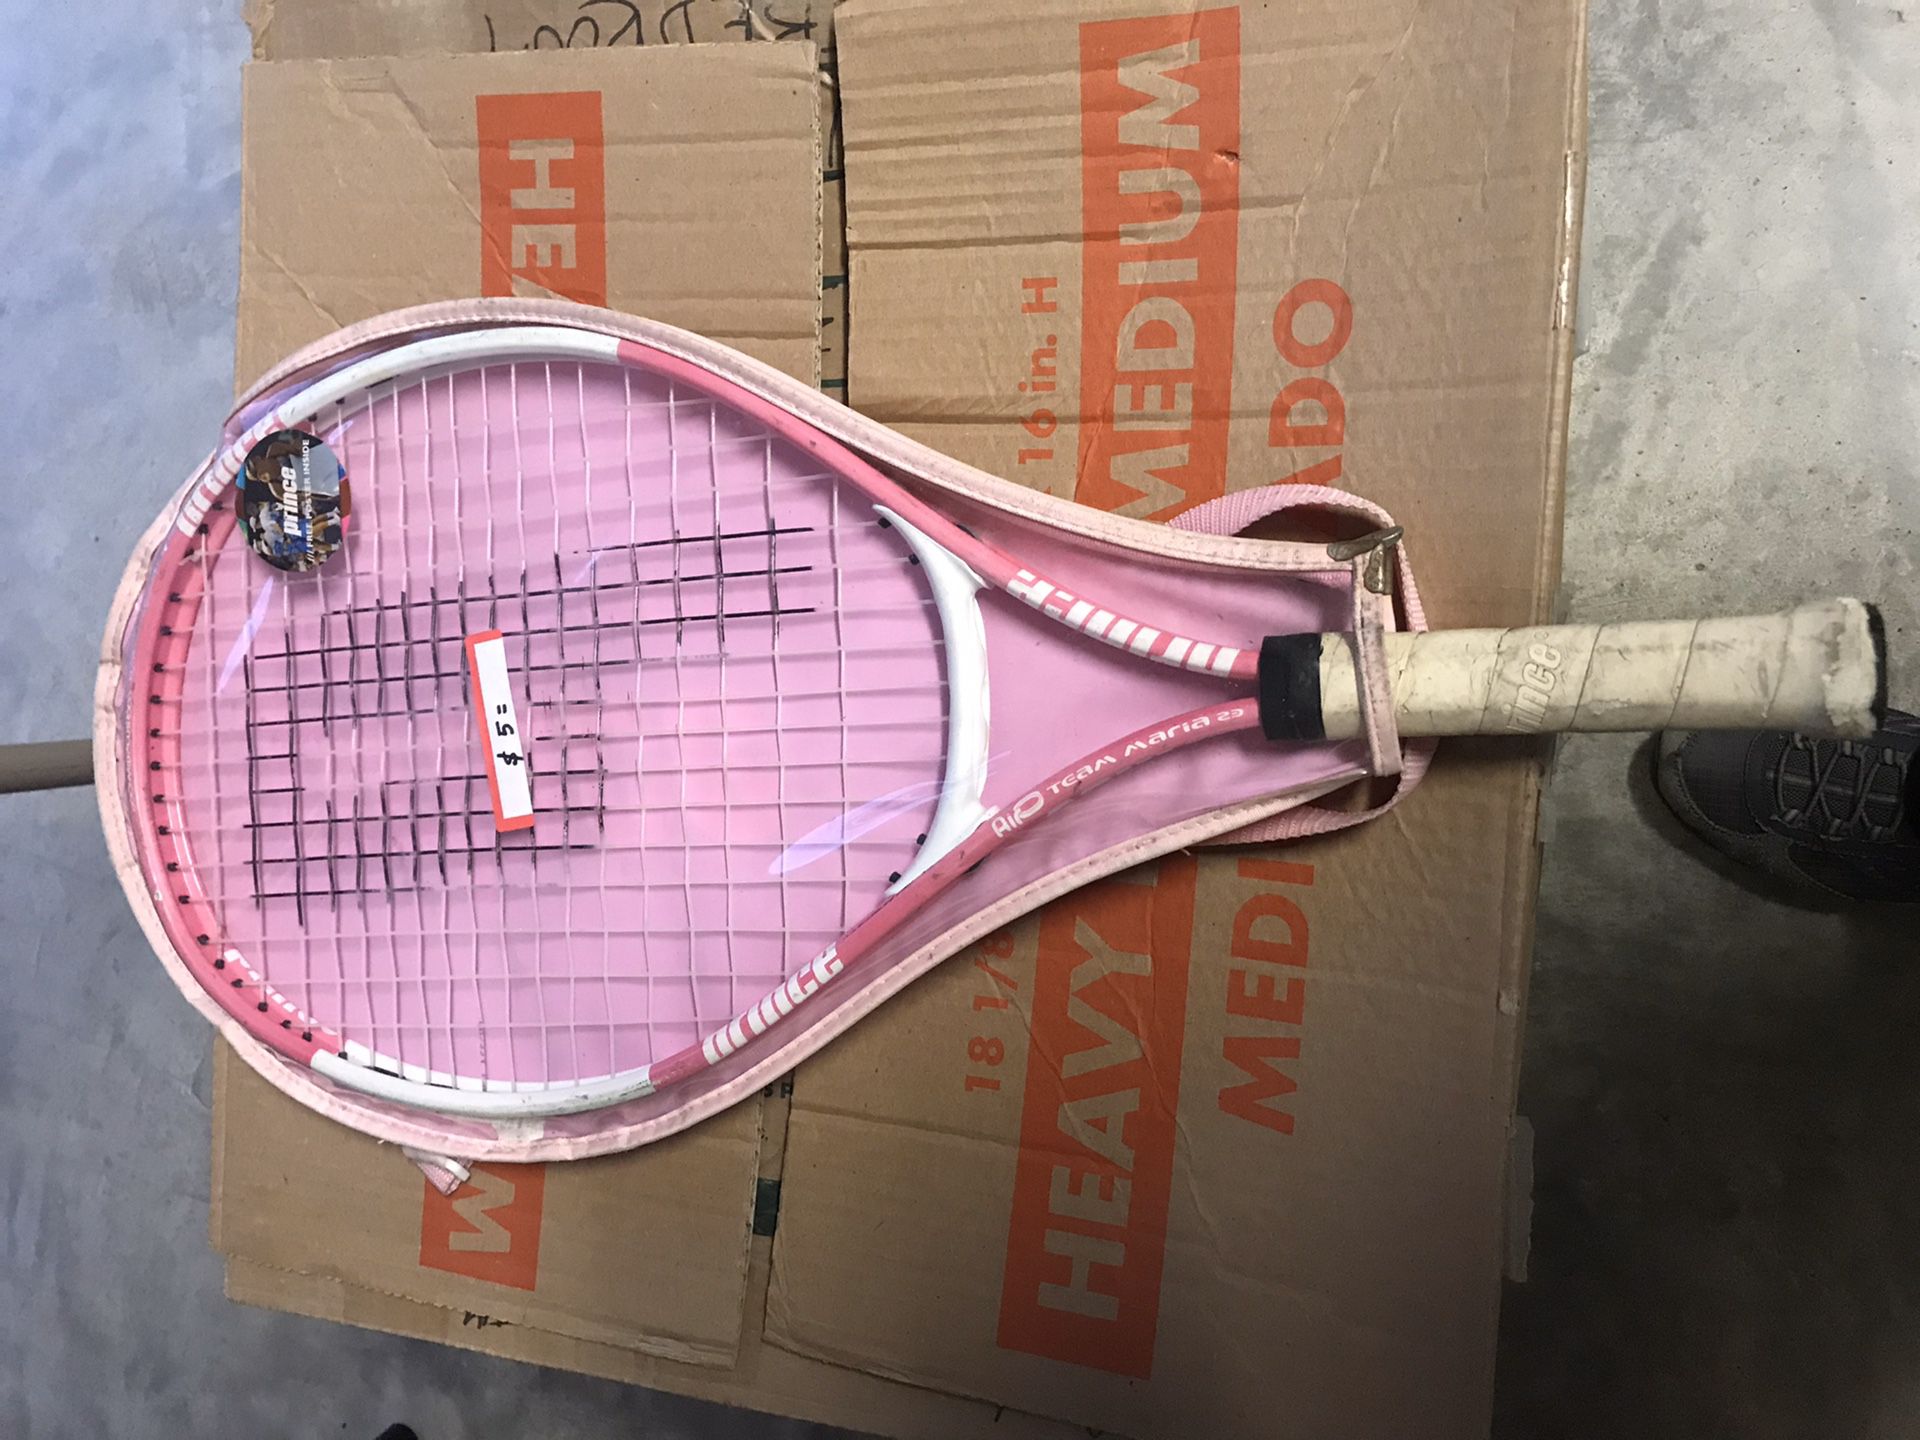 Tennis rackets For Kids